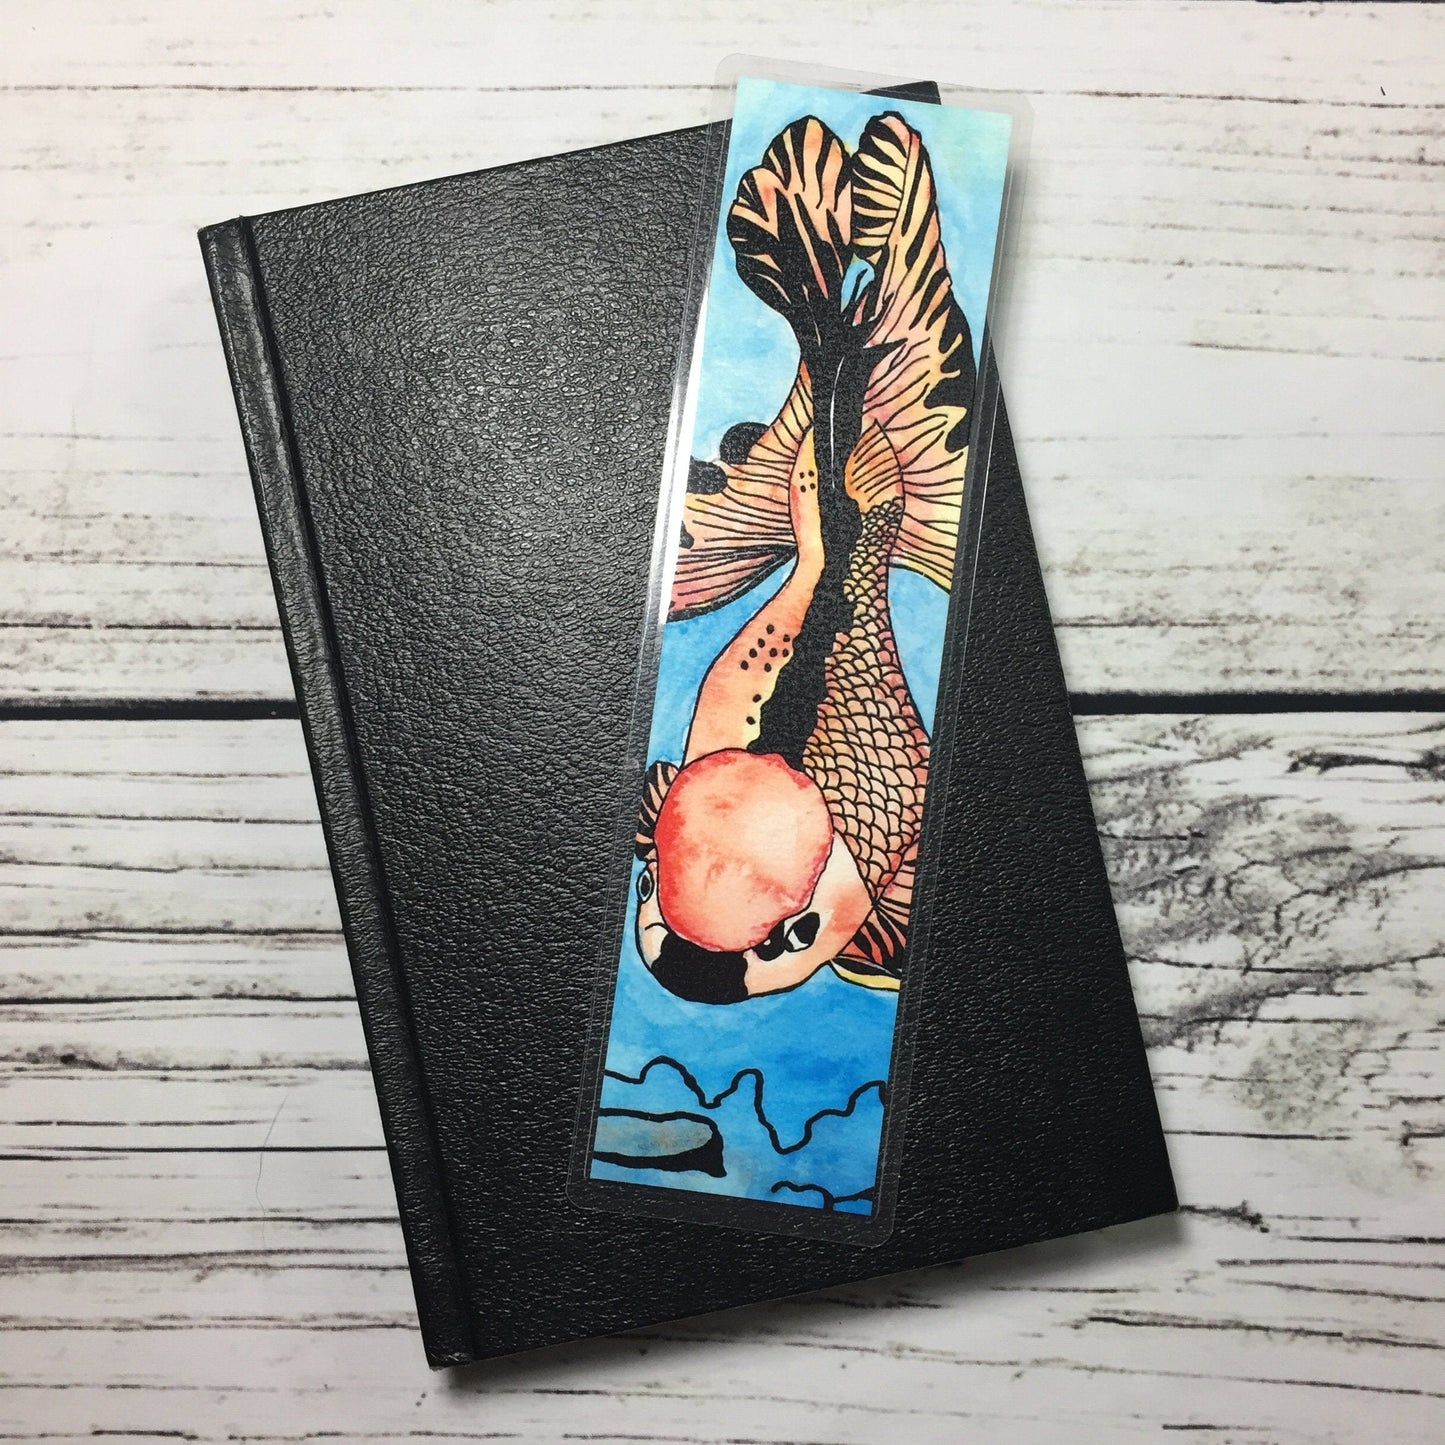 PinkPolish Design Bookmarks "Koi Fish" 2-Sided Bookmark